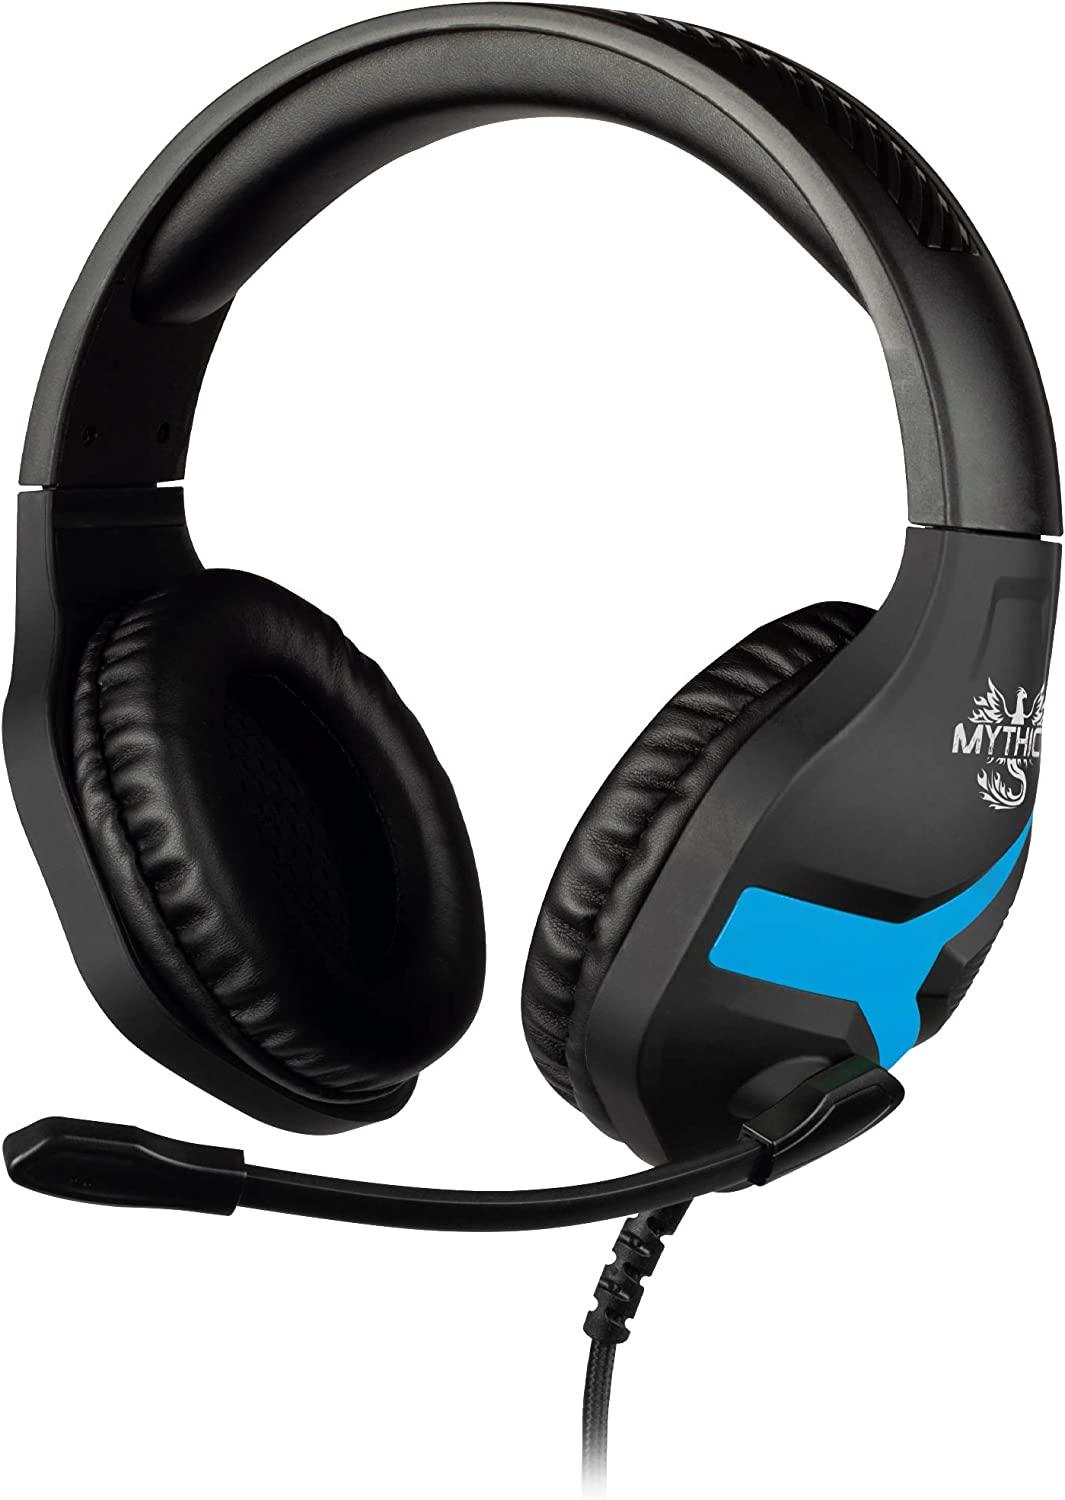 Konix Nemesis Gaming Headset for PS4 - GameStore.mt | Powered by Flutisat